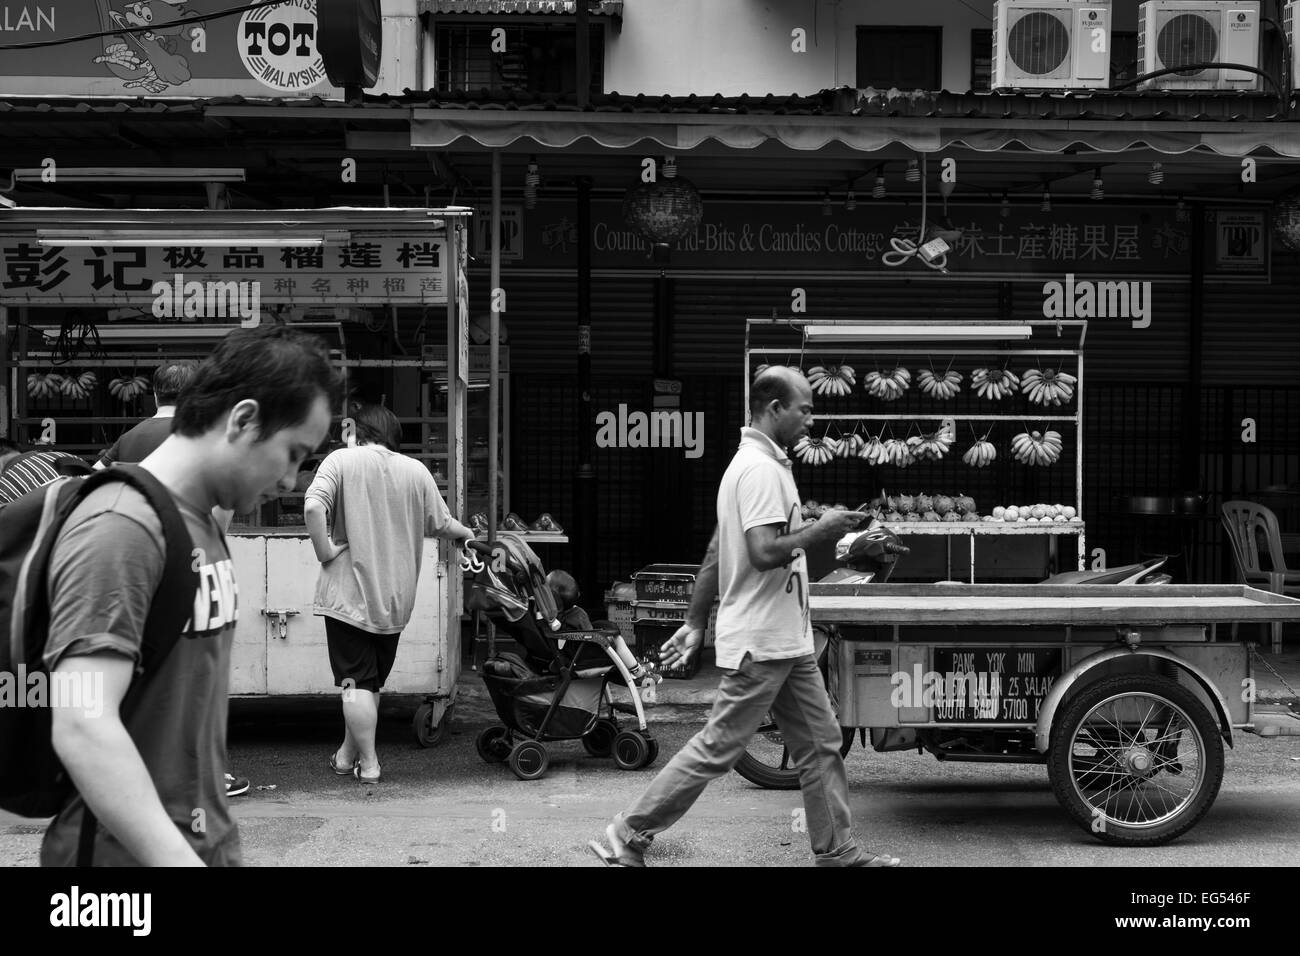 Kuala lumpur street food Black and White Stock Photos & Images - Alamy